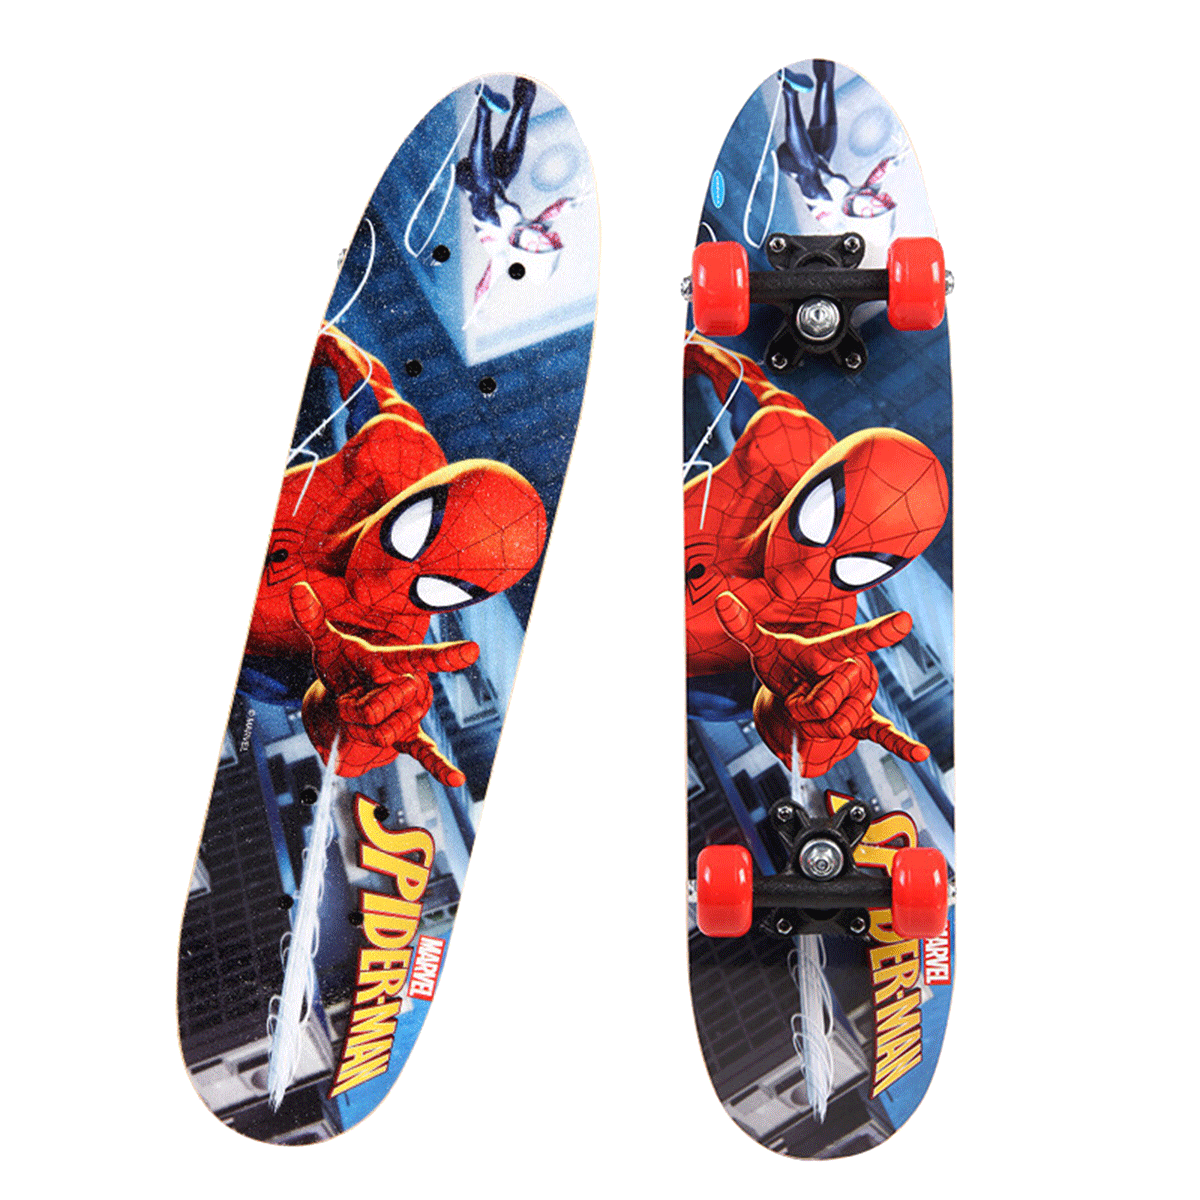 Disney Frozen Elsa Marvel Spiderman Avengers 24 inch Wood Skateboard